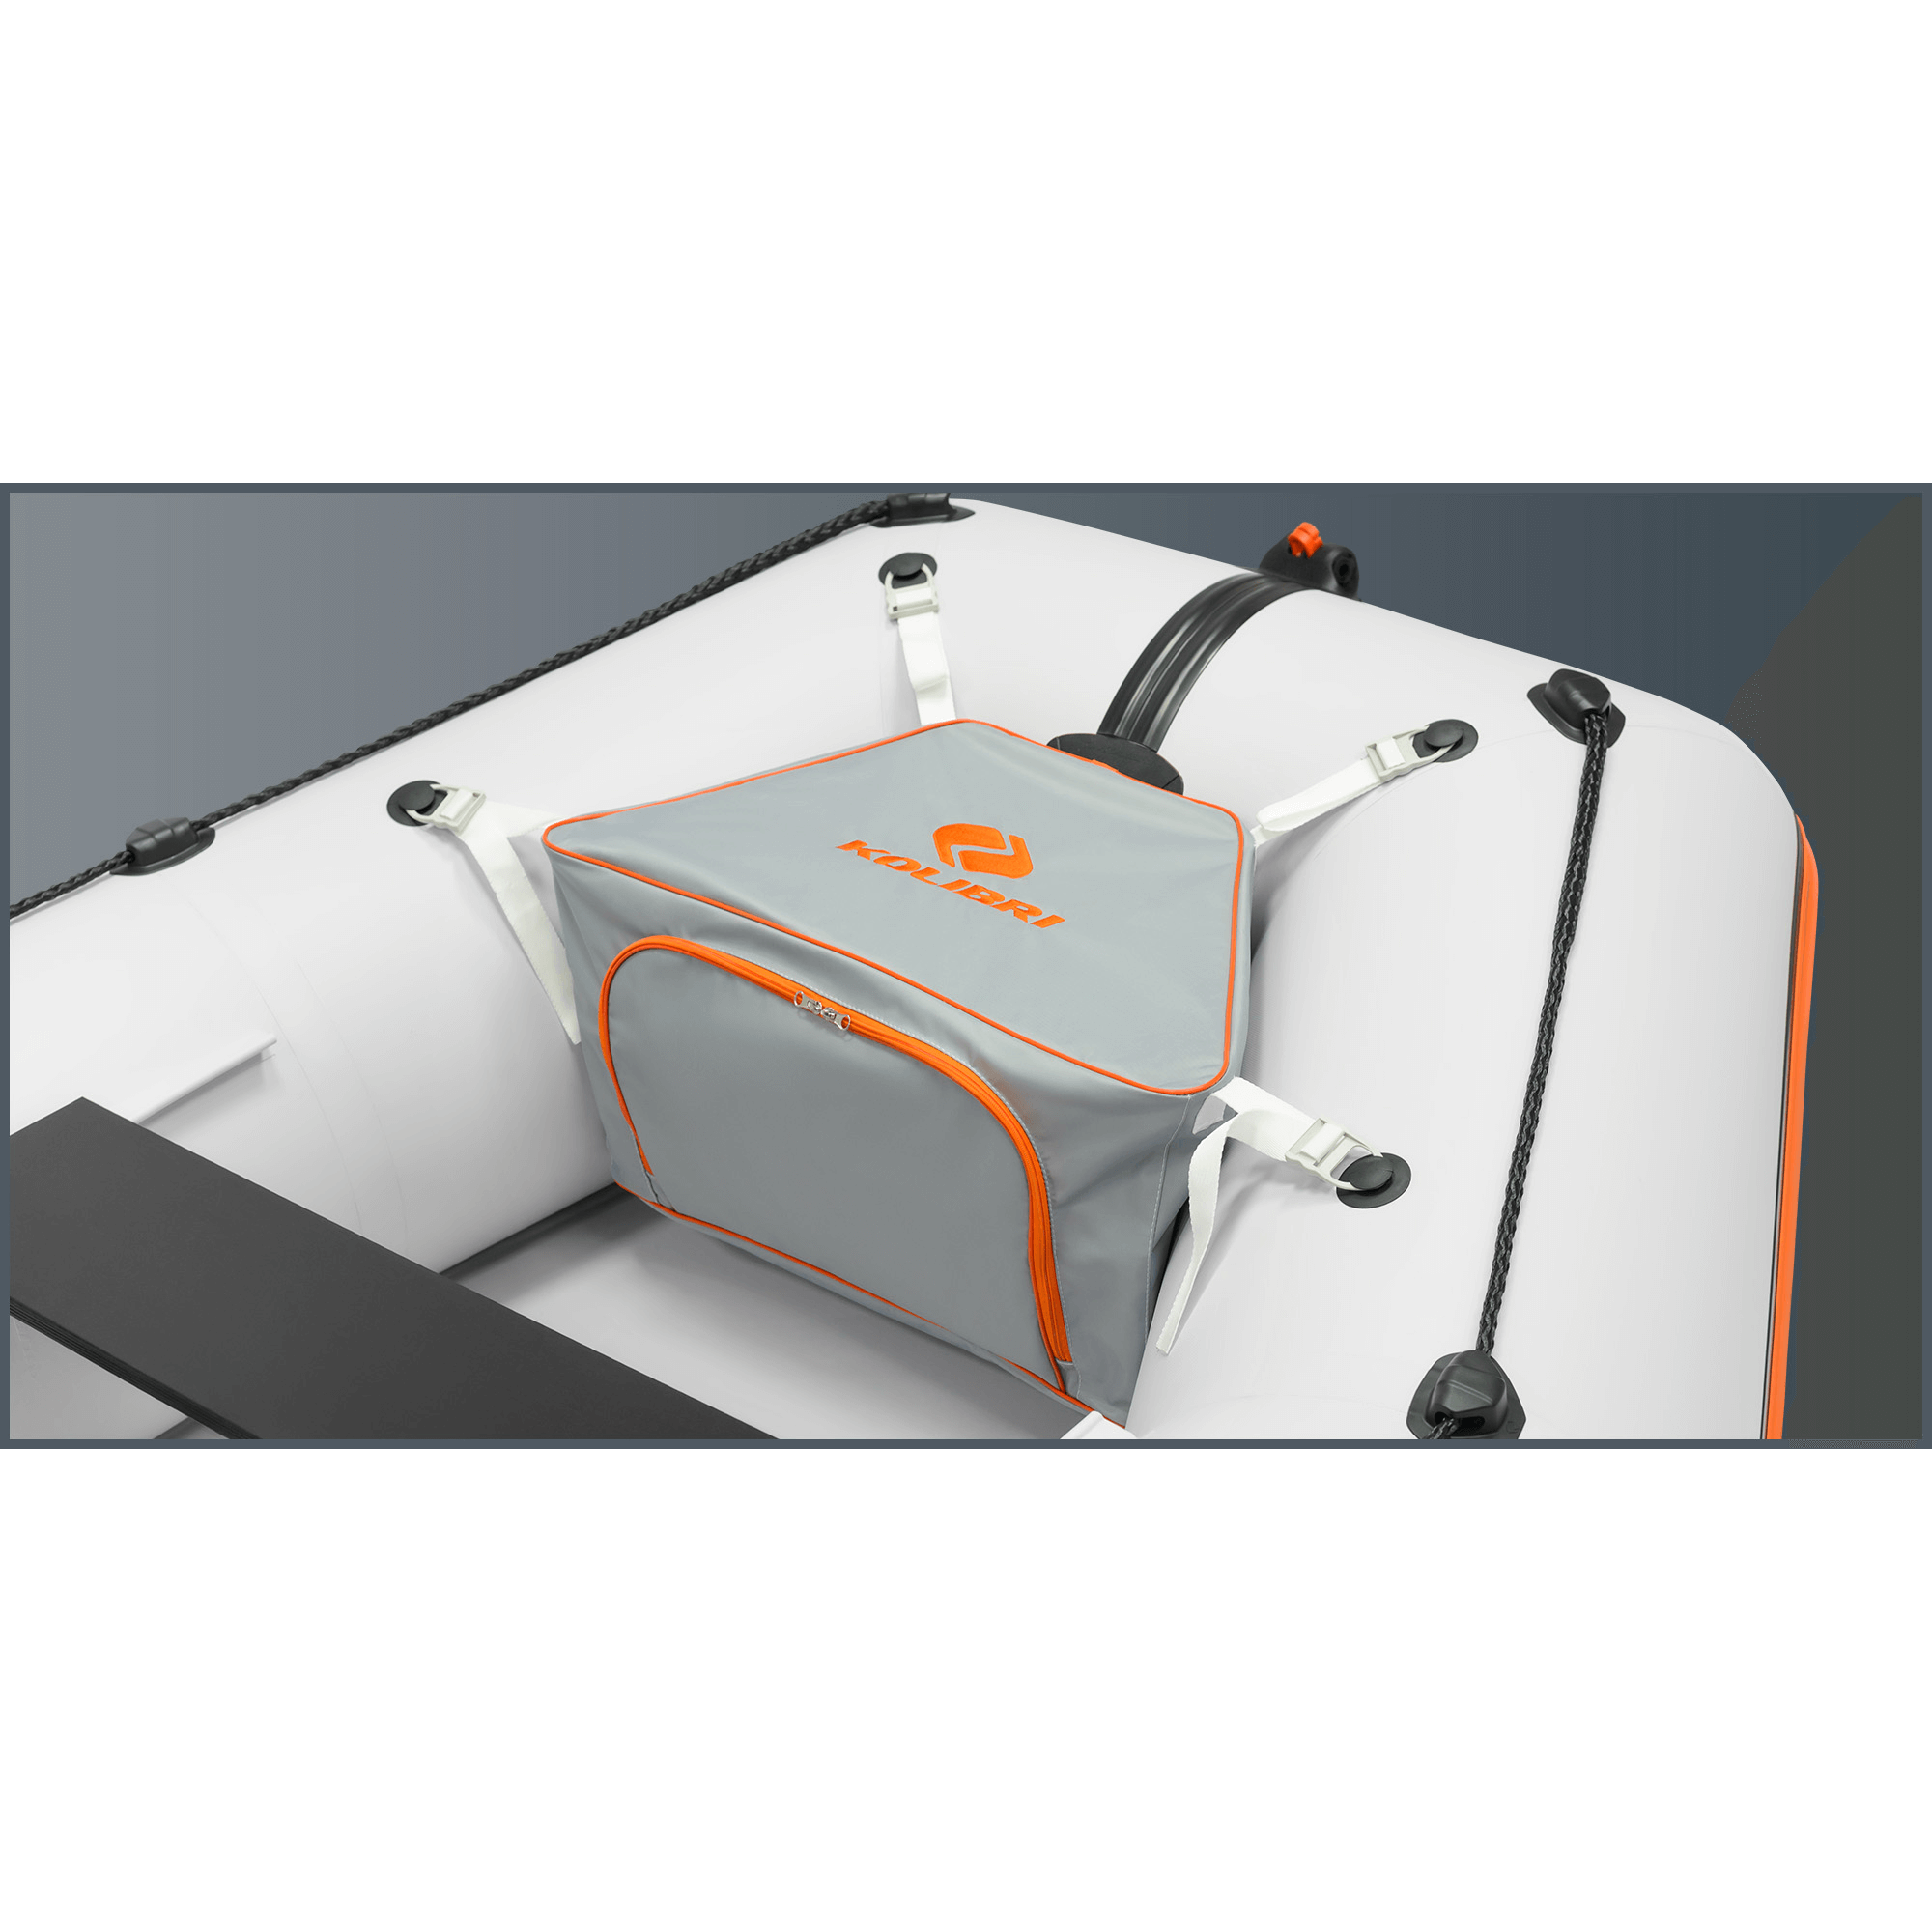 Kolibri KM-360D inflatable boat – Kolibri Marine